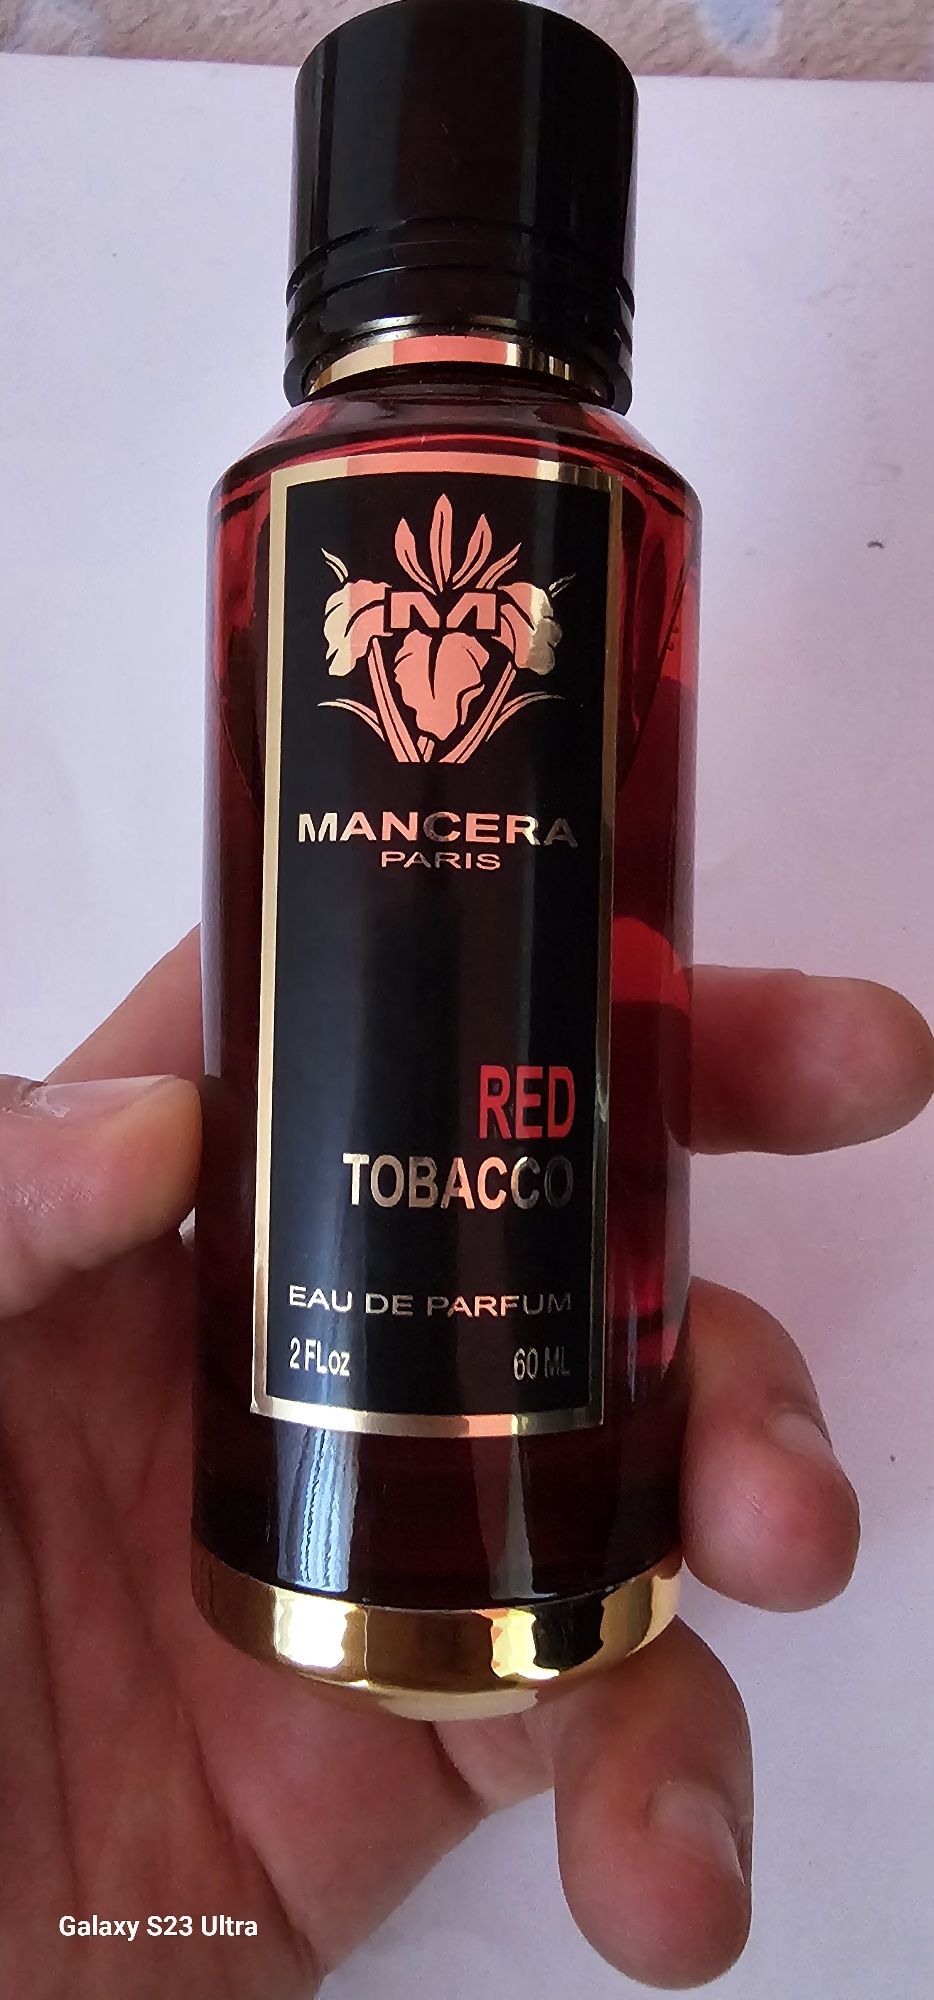 Mancera red tobacco